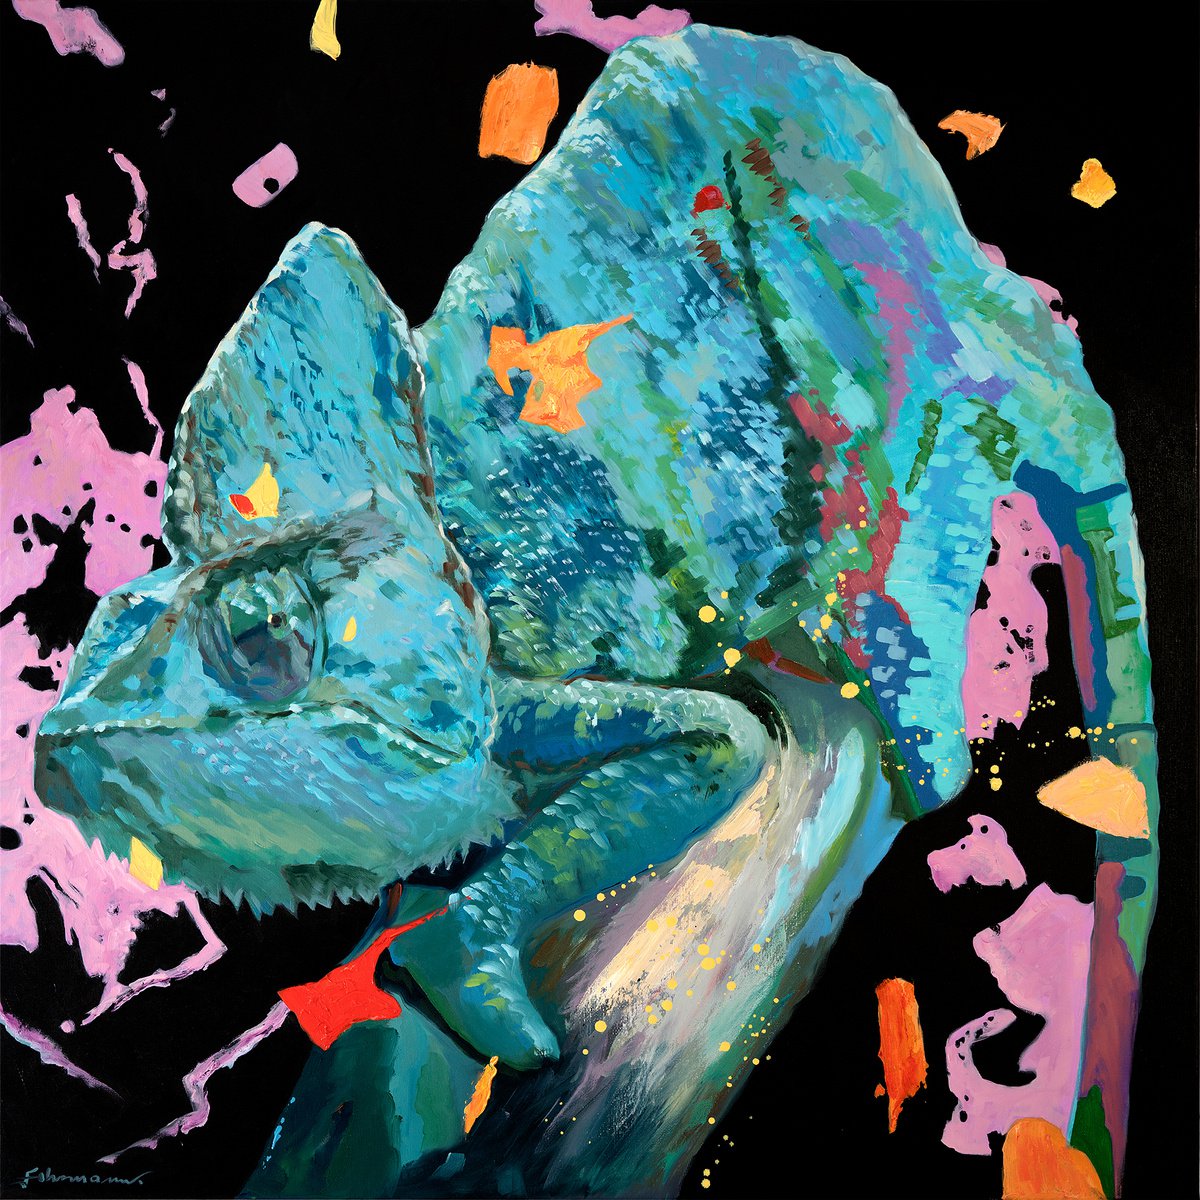 Quo vadis? No. 3, Chameleon, oil on canvas by Uwe Fehrmann